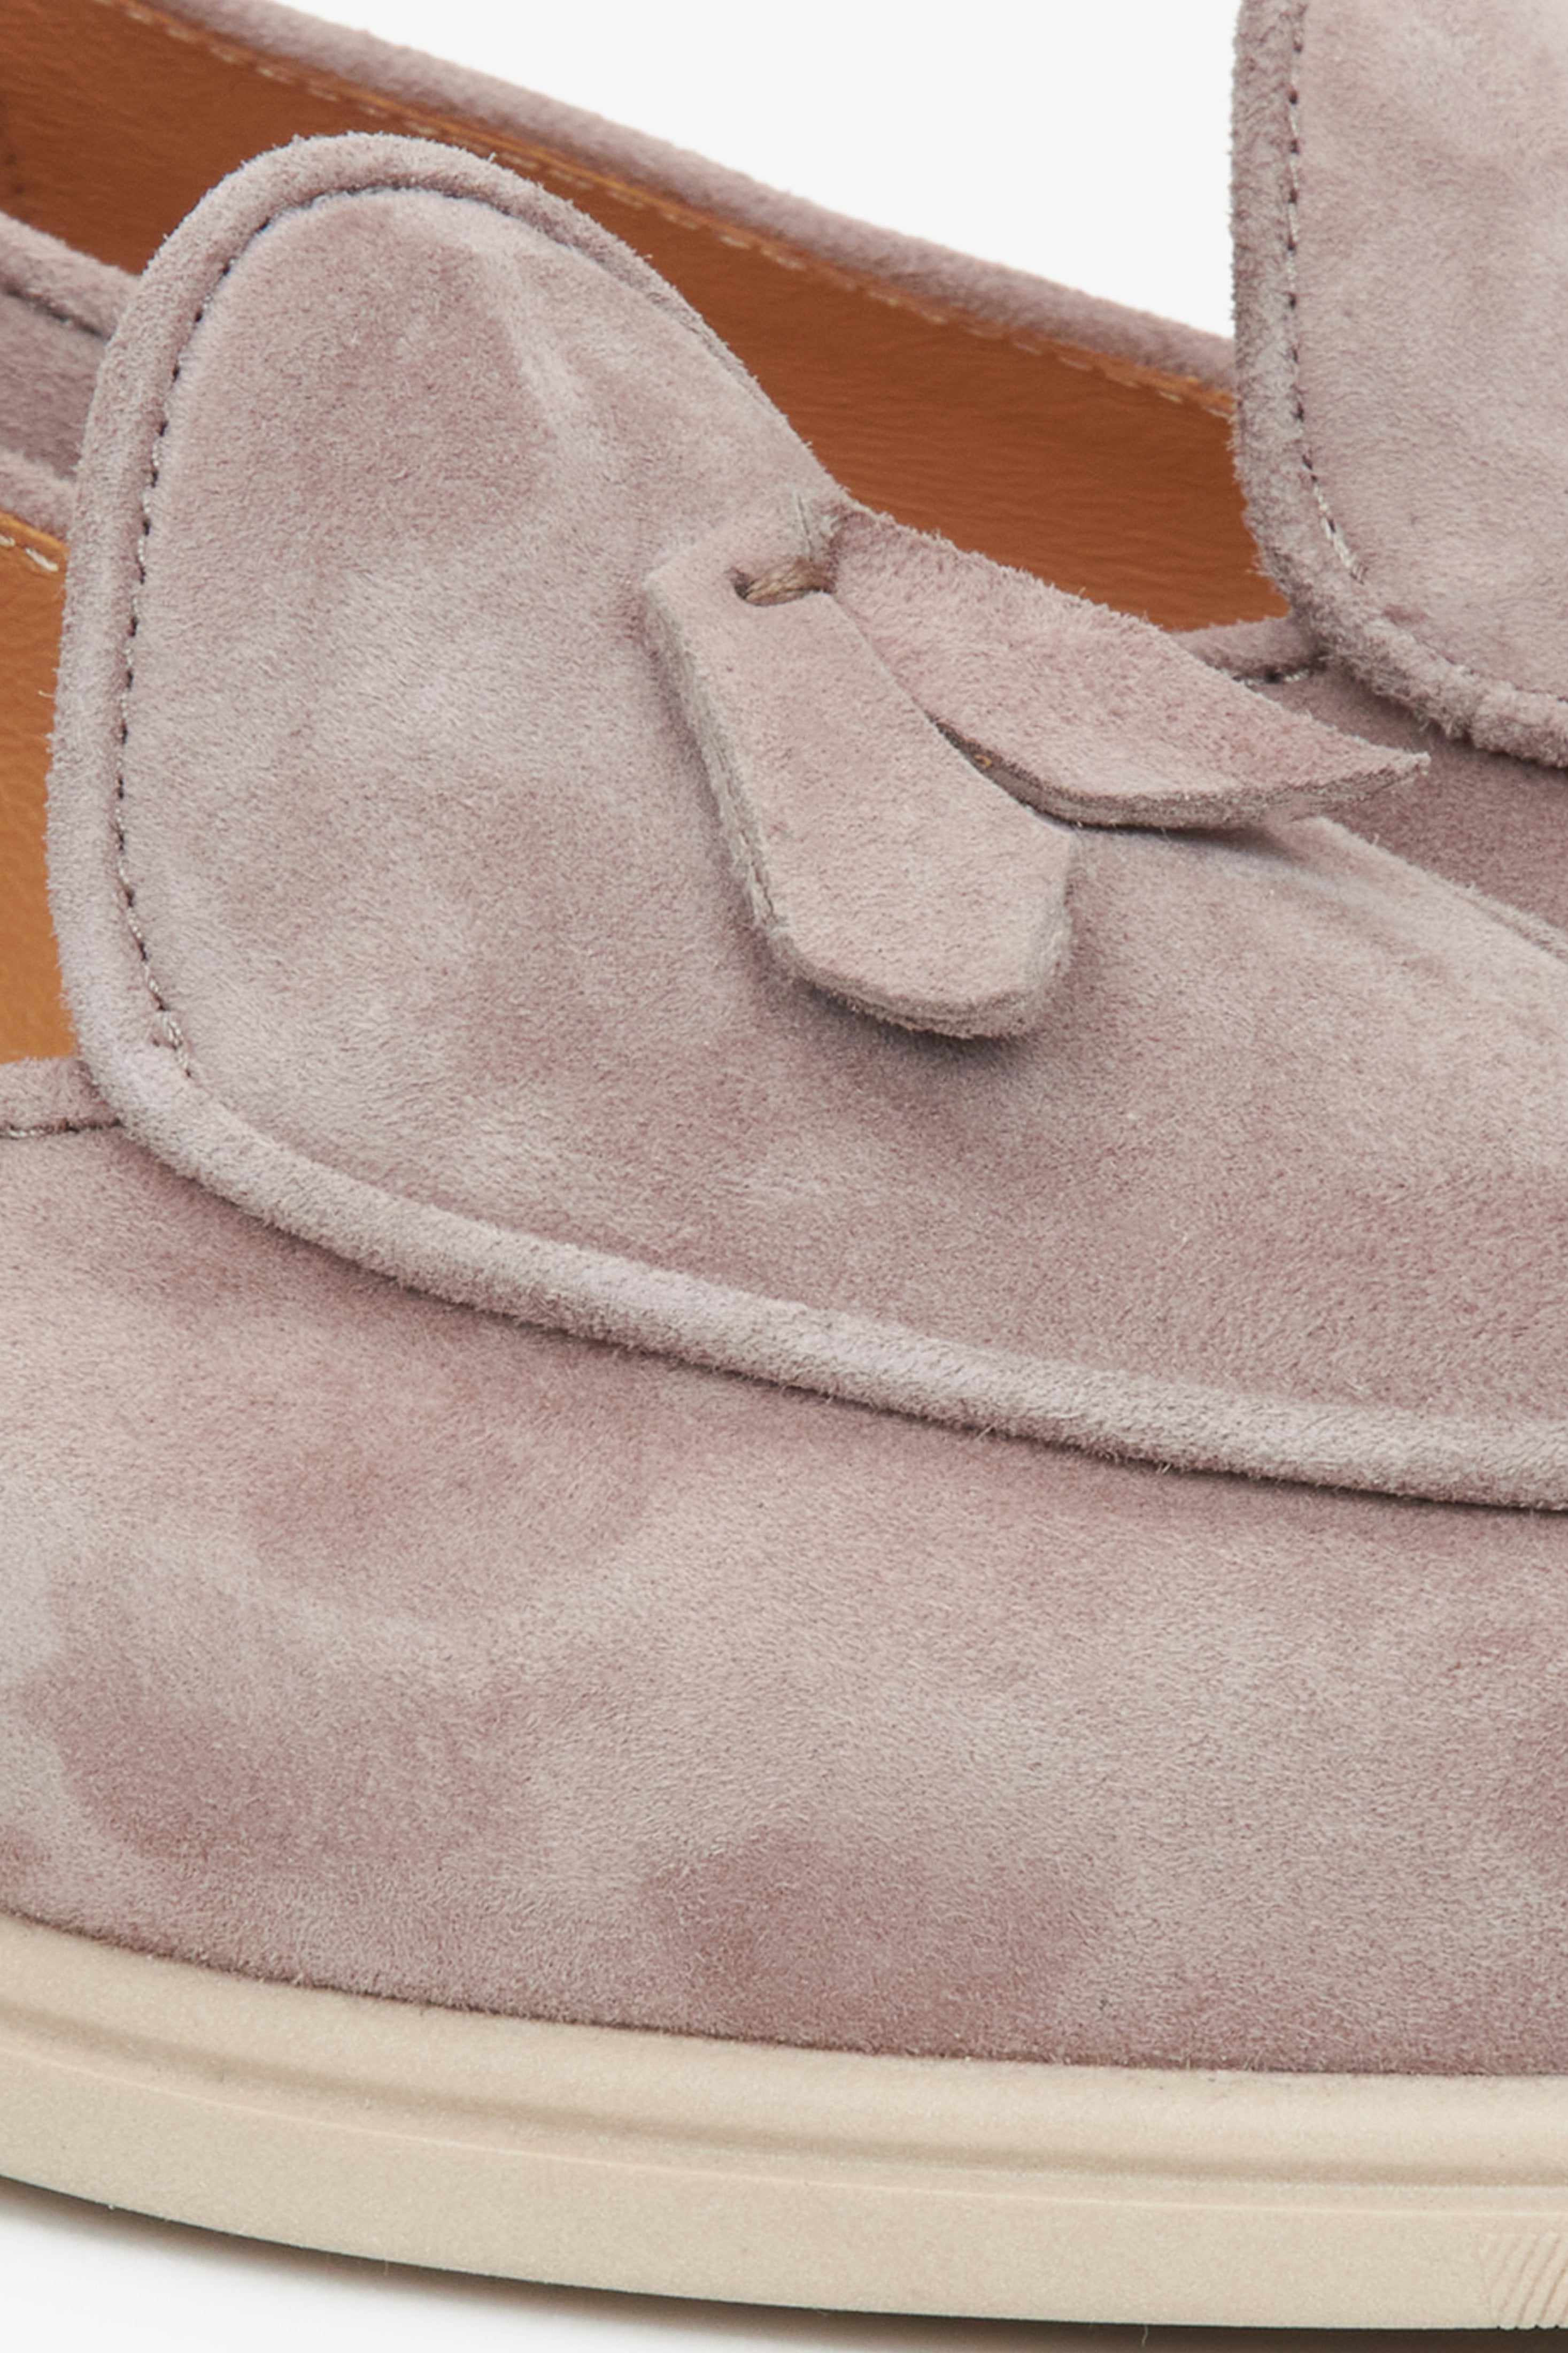 Women's beige velour moccasins by Estro - close-up on details.